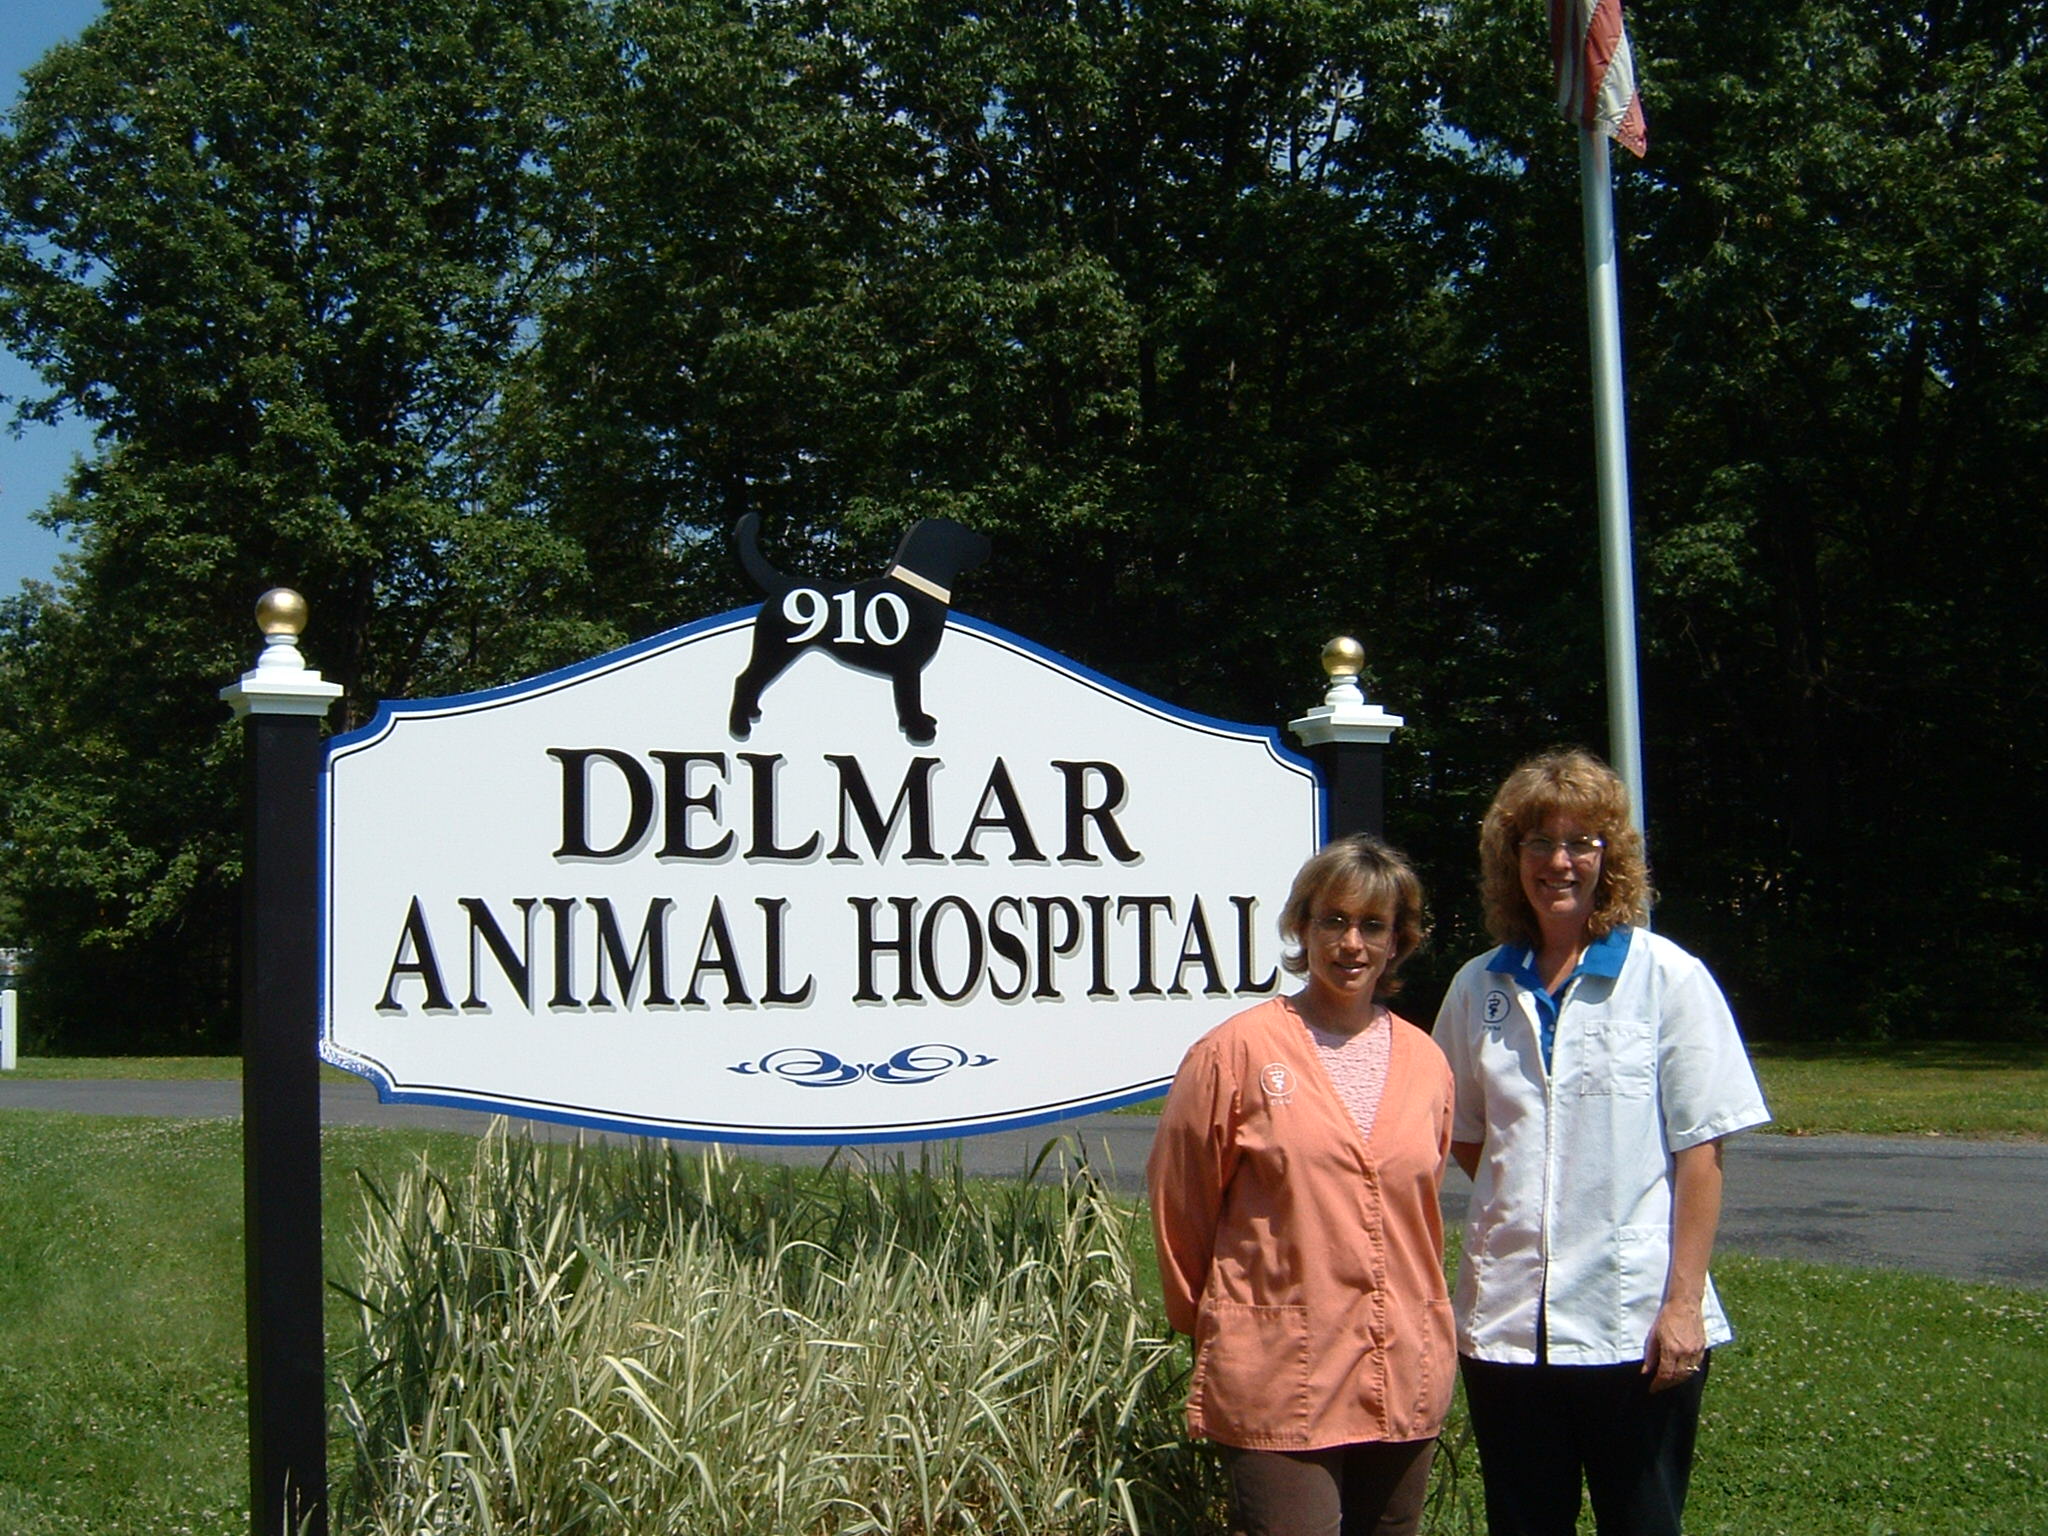 Delmar Animal Hospital